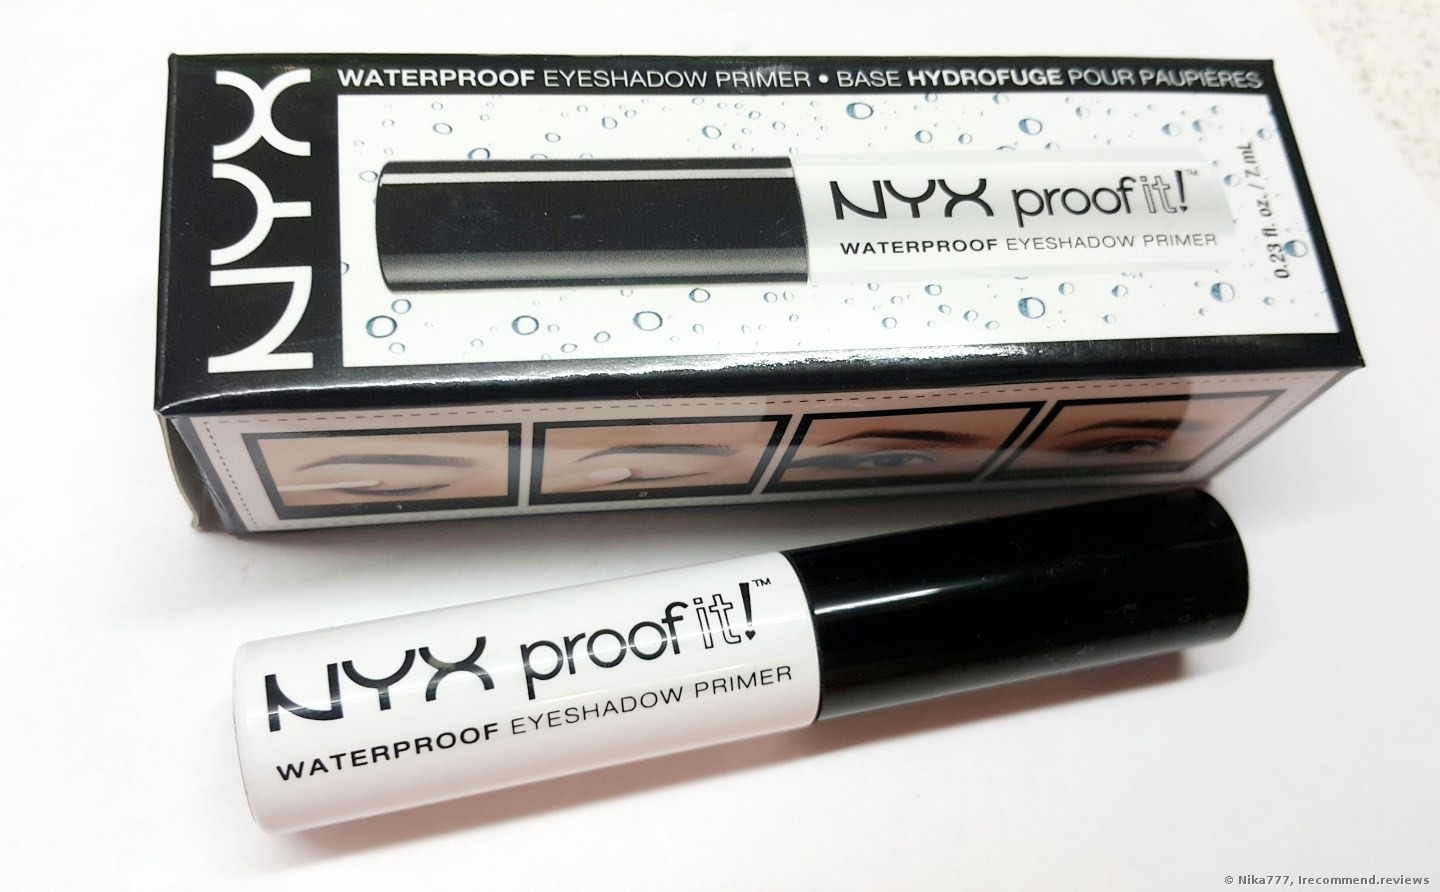 NYX праймер для век. NYX Waterproof Eyeshadow primer. Waterproof NYX Proof it. Основа под тени NYX. Eyeshadow primer